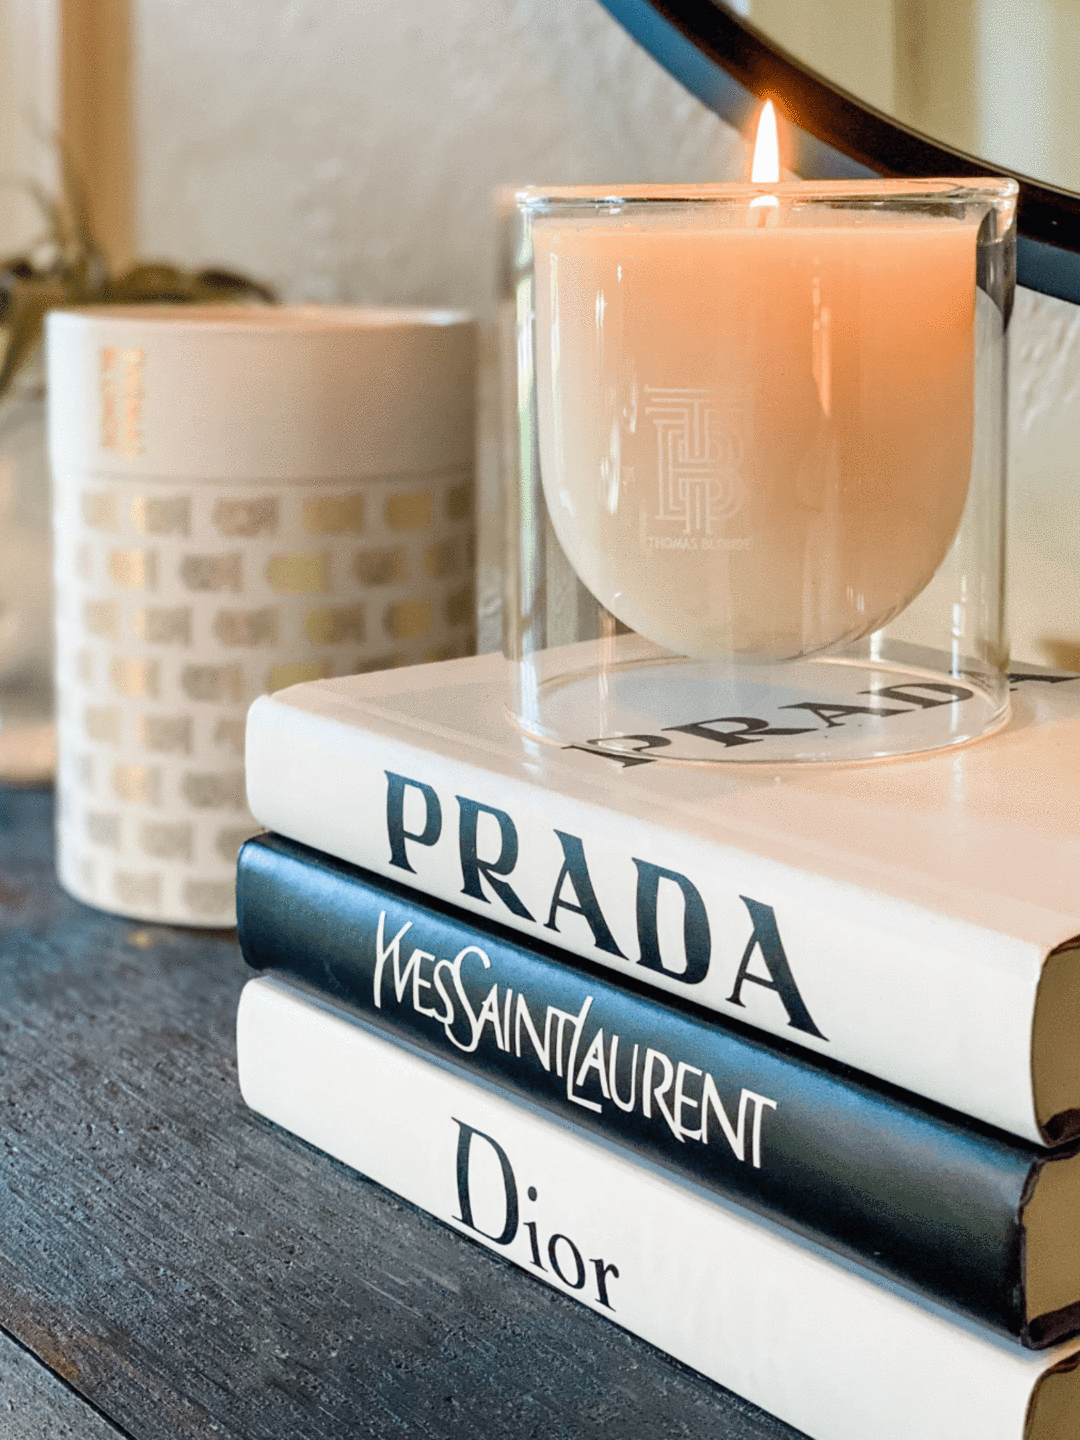 Prada Catwalk - Coffee Table Book